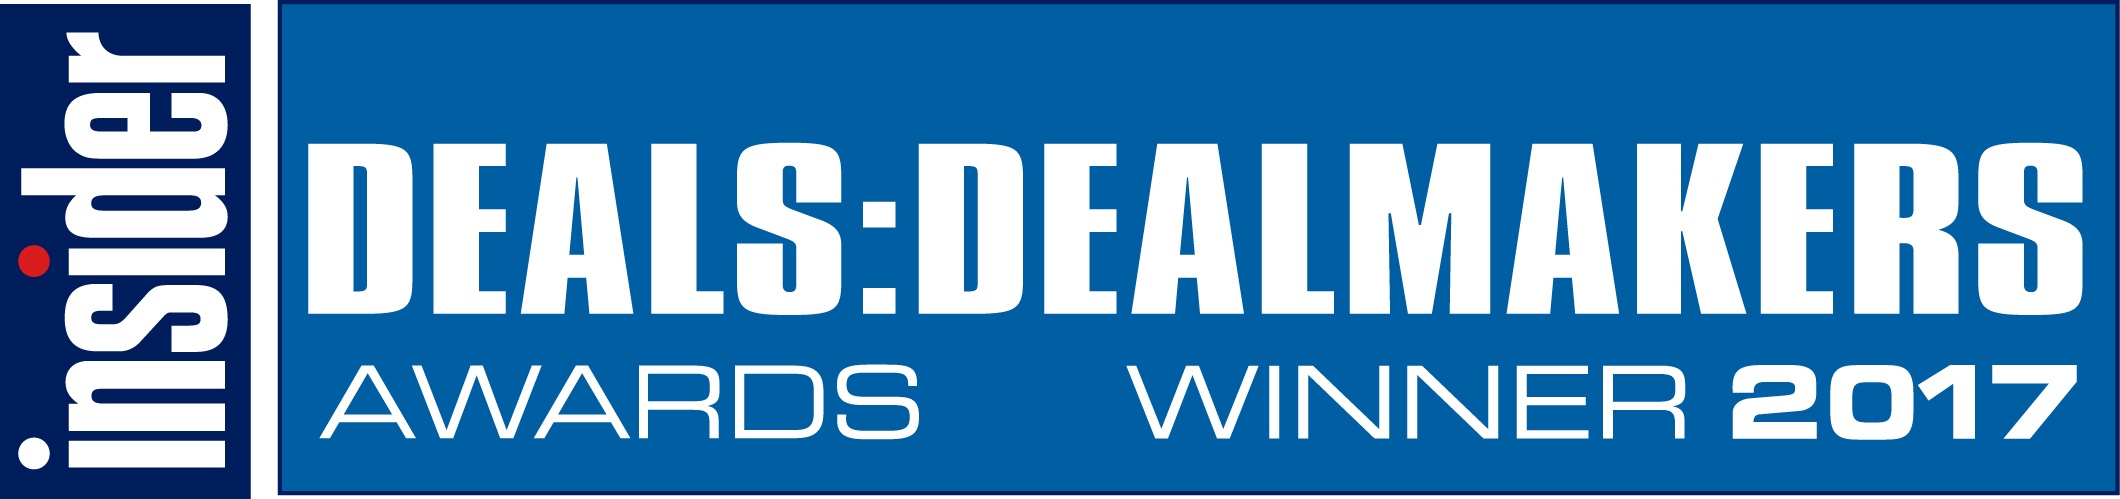 Deals Award WIN Logo 2107.jpg